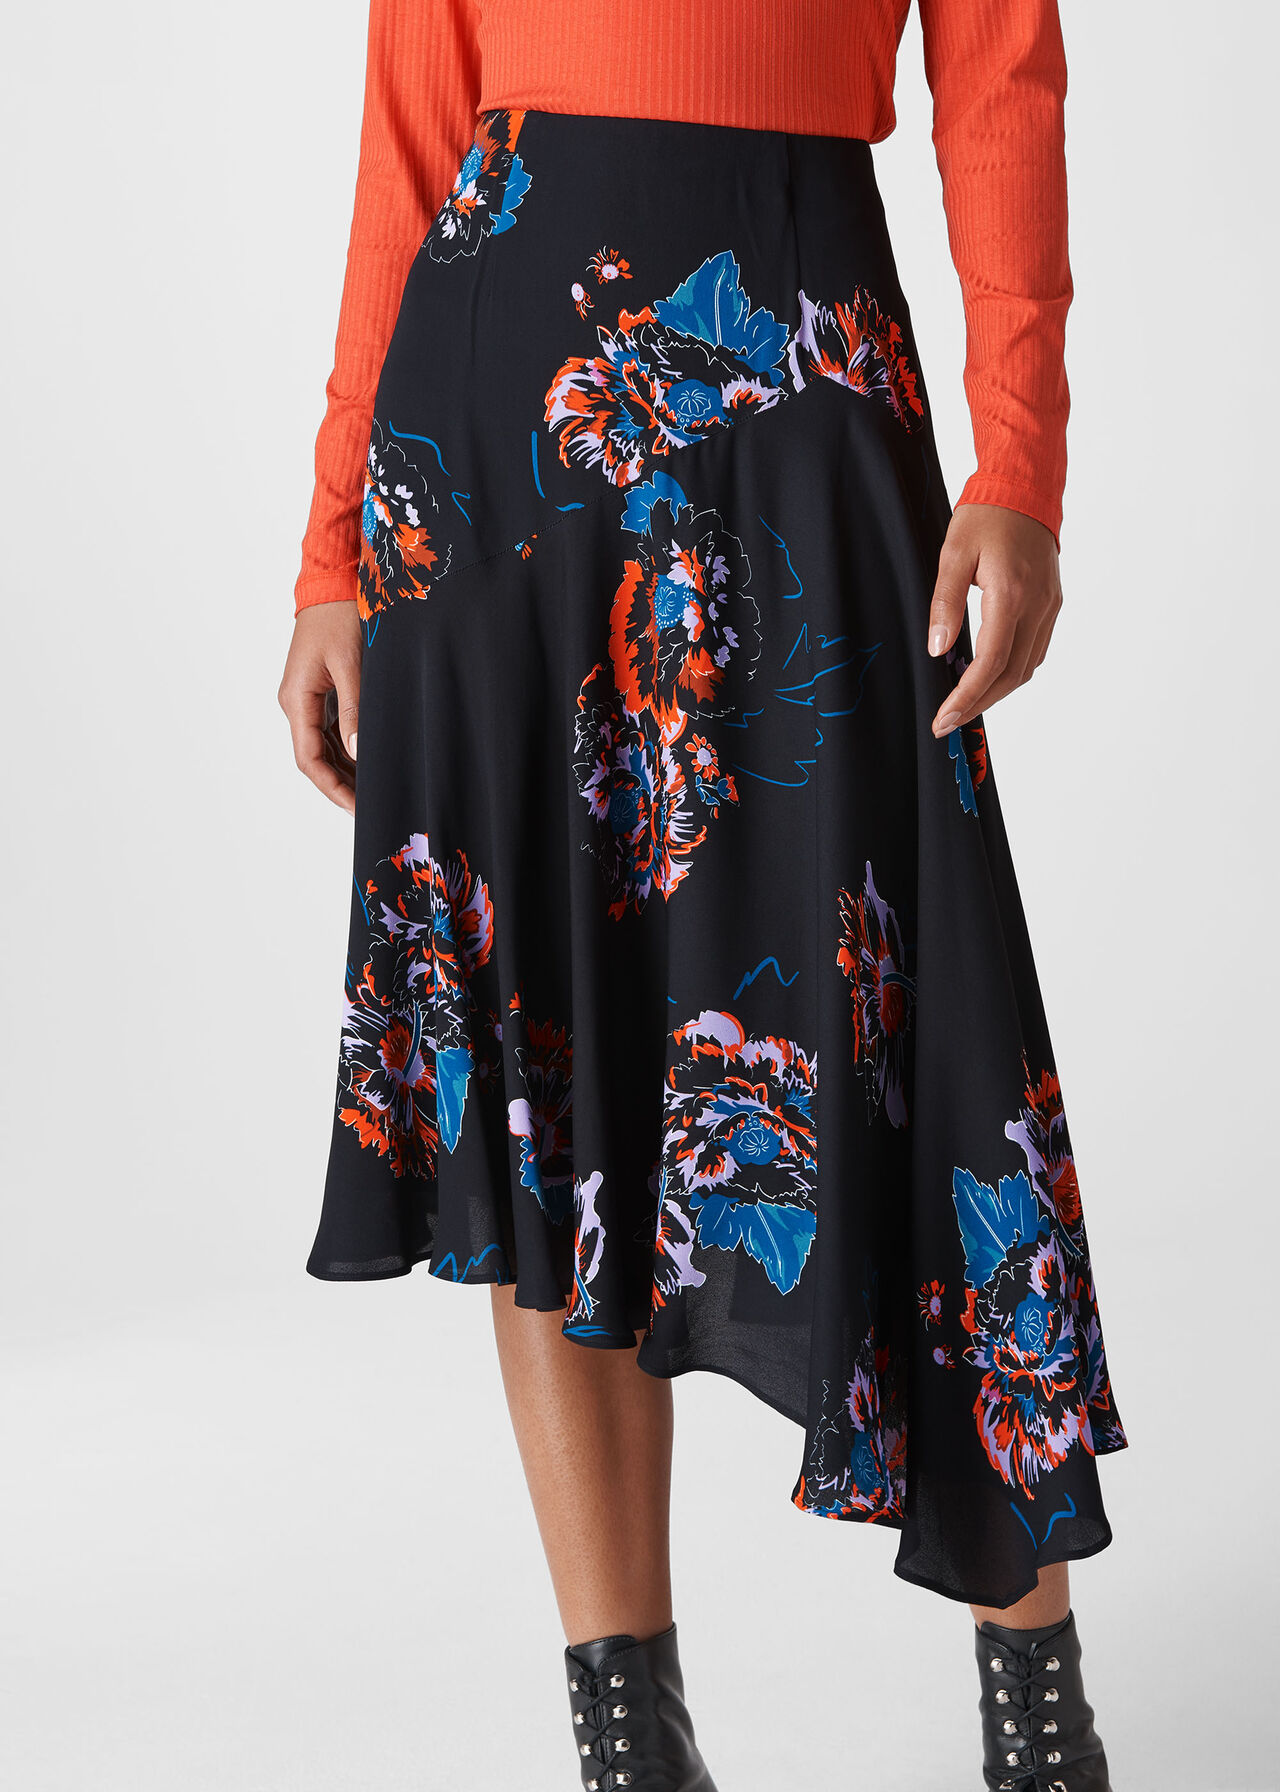 Freya Print Asymmetric Skirt Black/Multi